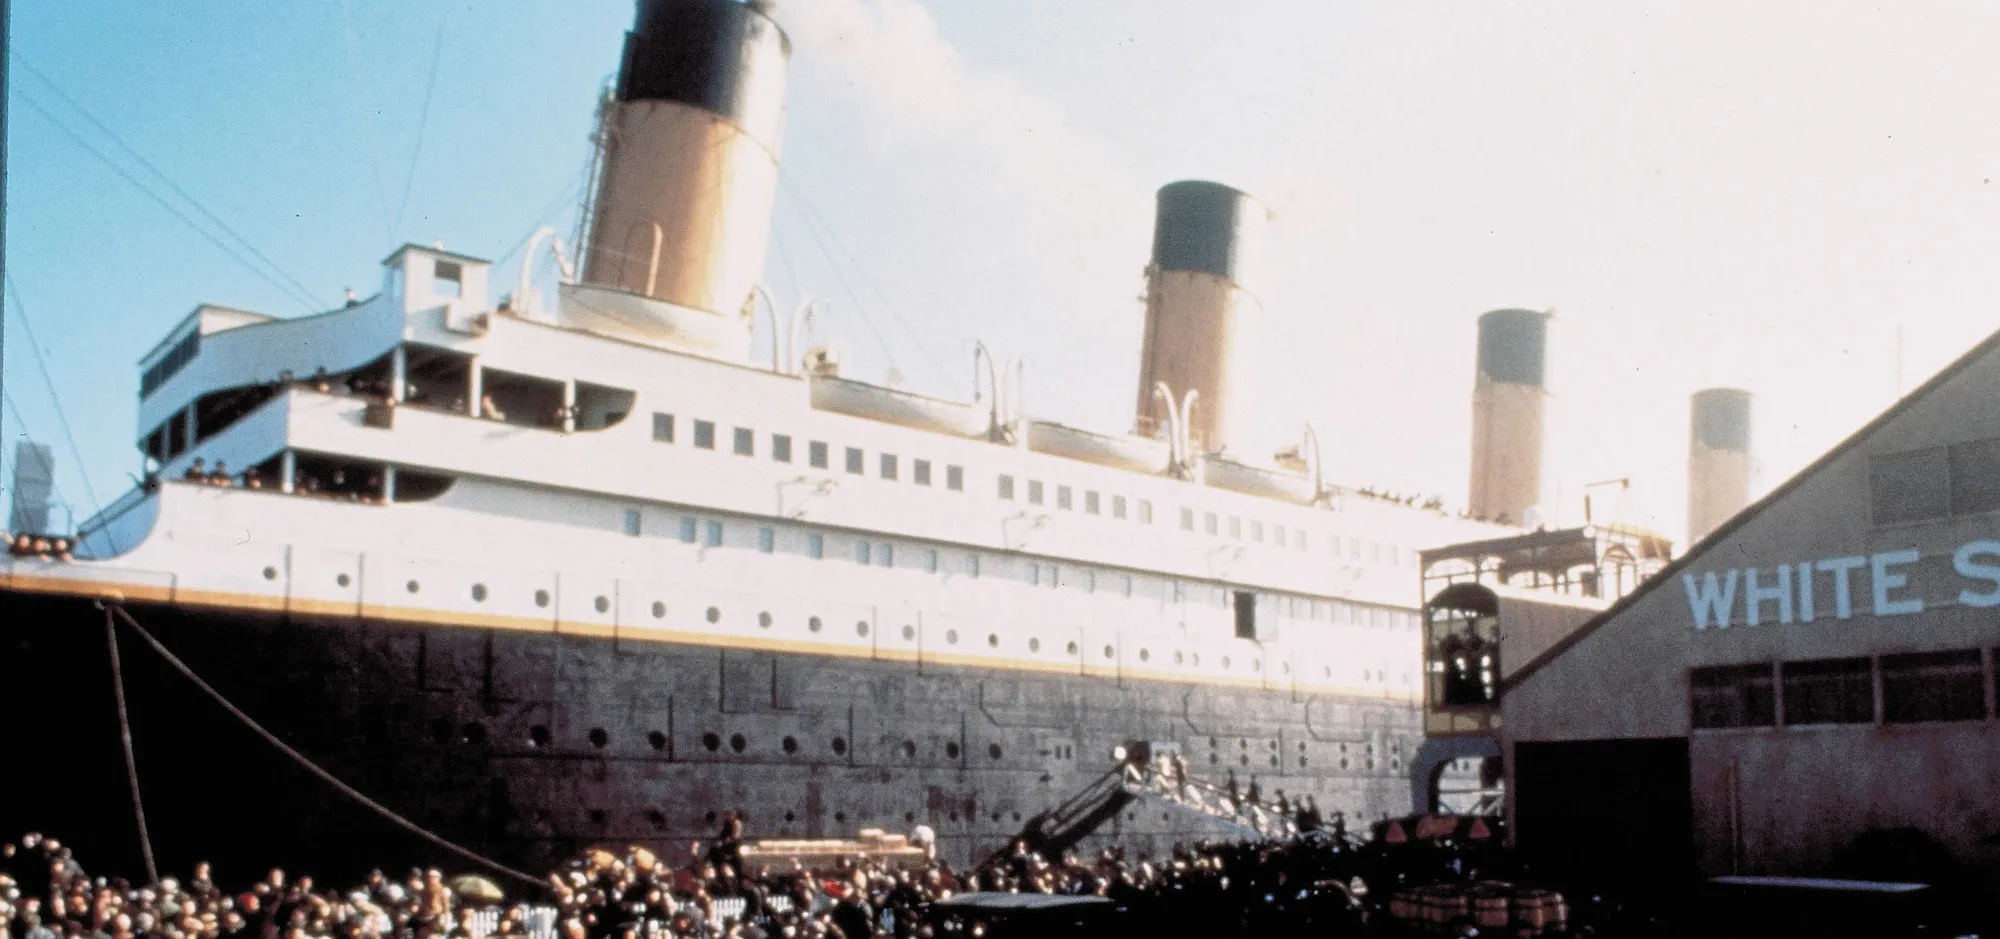 Cover photo of Titanic